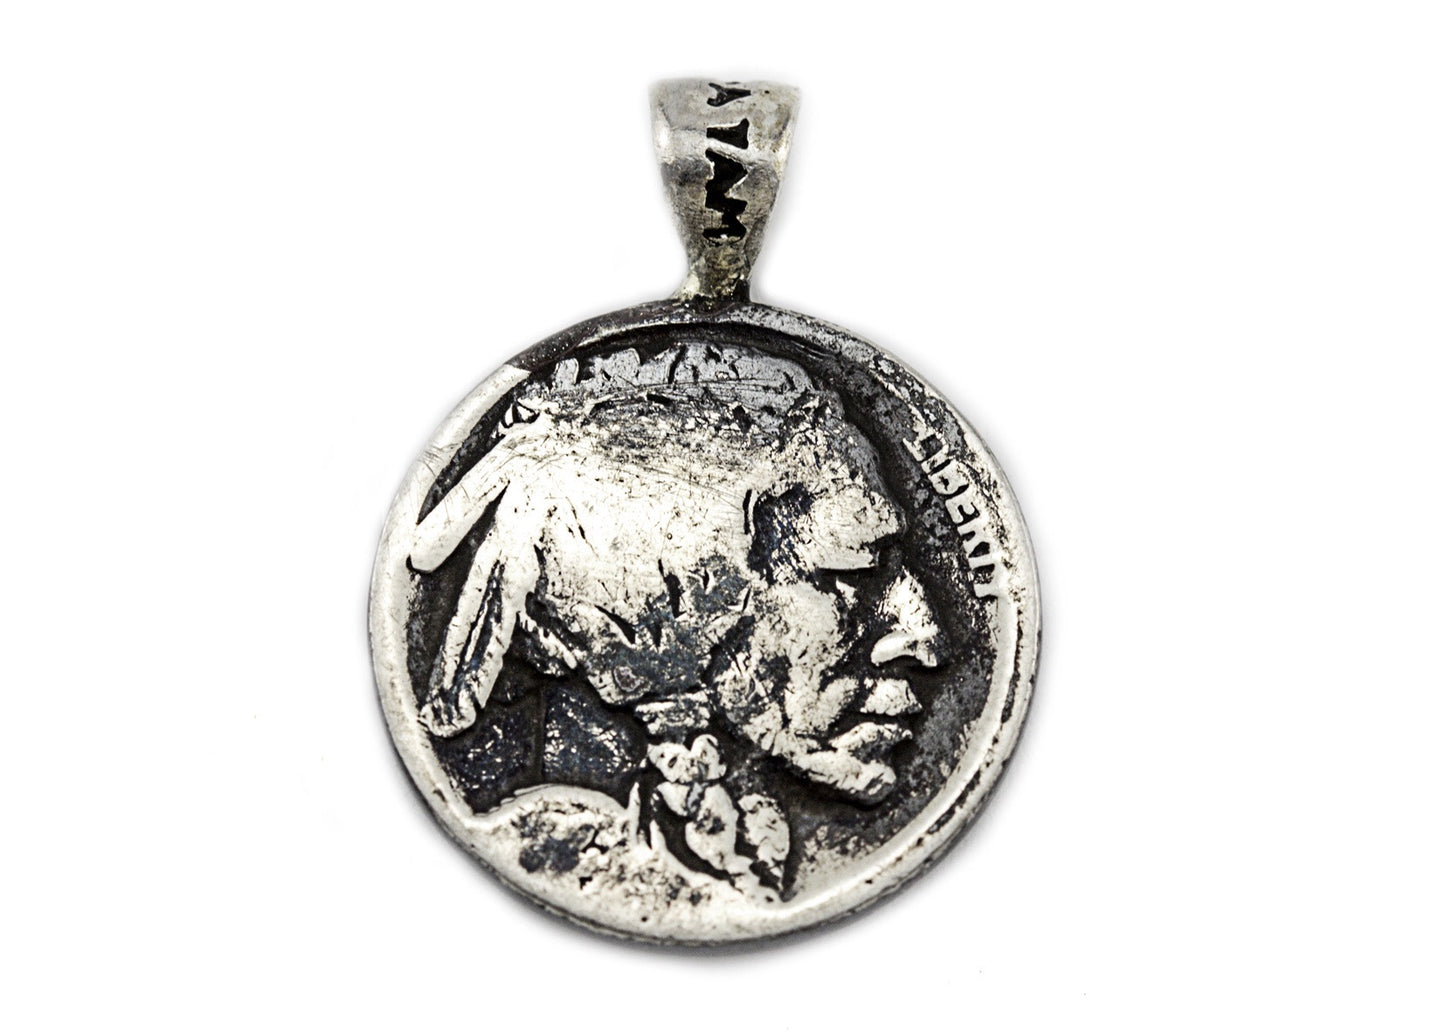 Kokopelli coin medallion and the Buffalo Nickel coin of USA